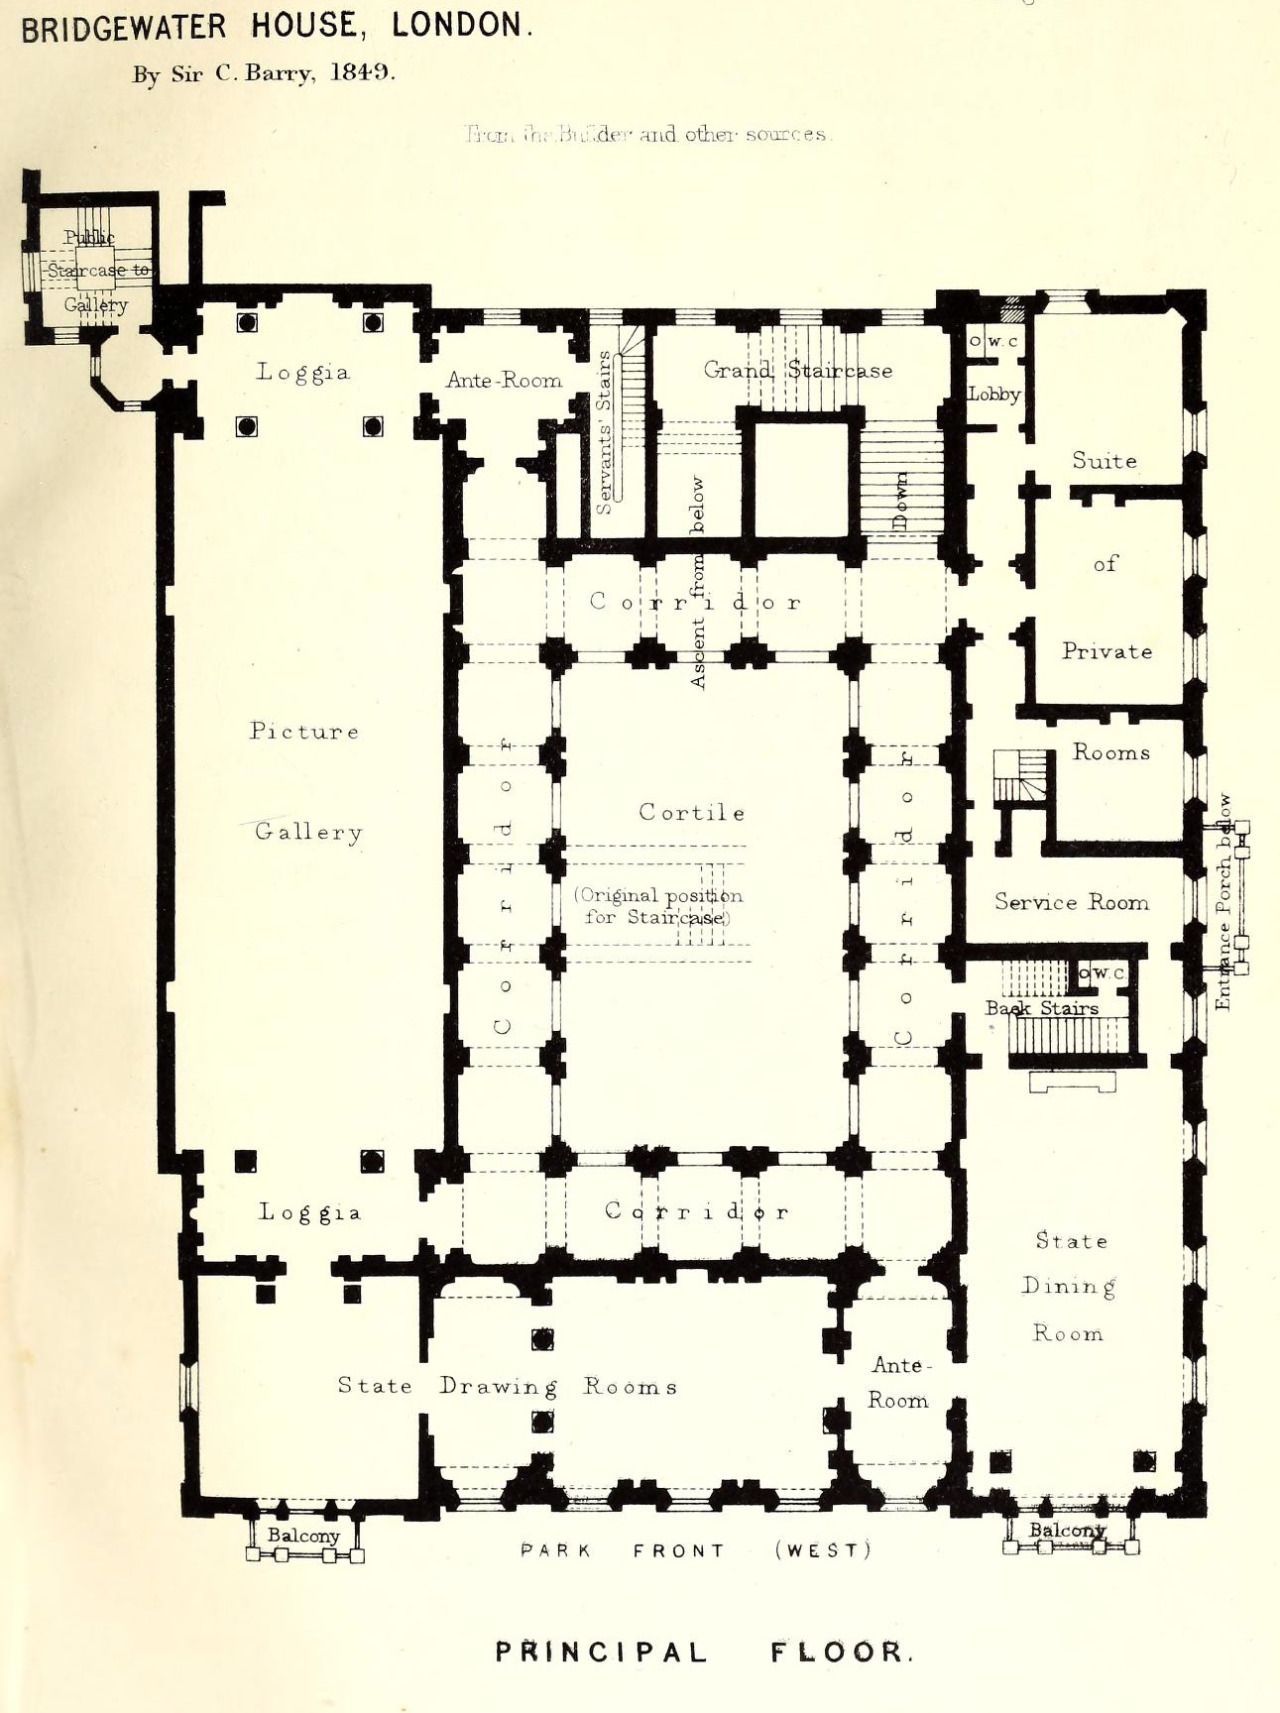 Floorplan of the Bridgewater House, London ARCHI/MAPS